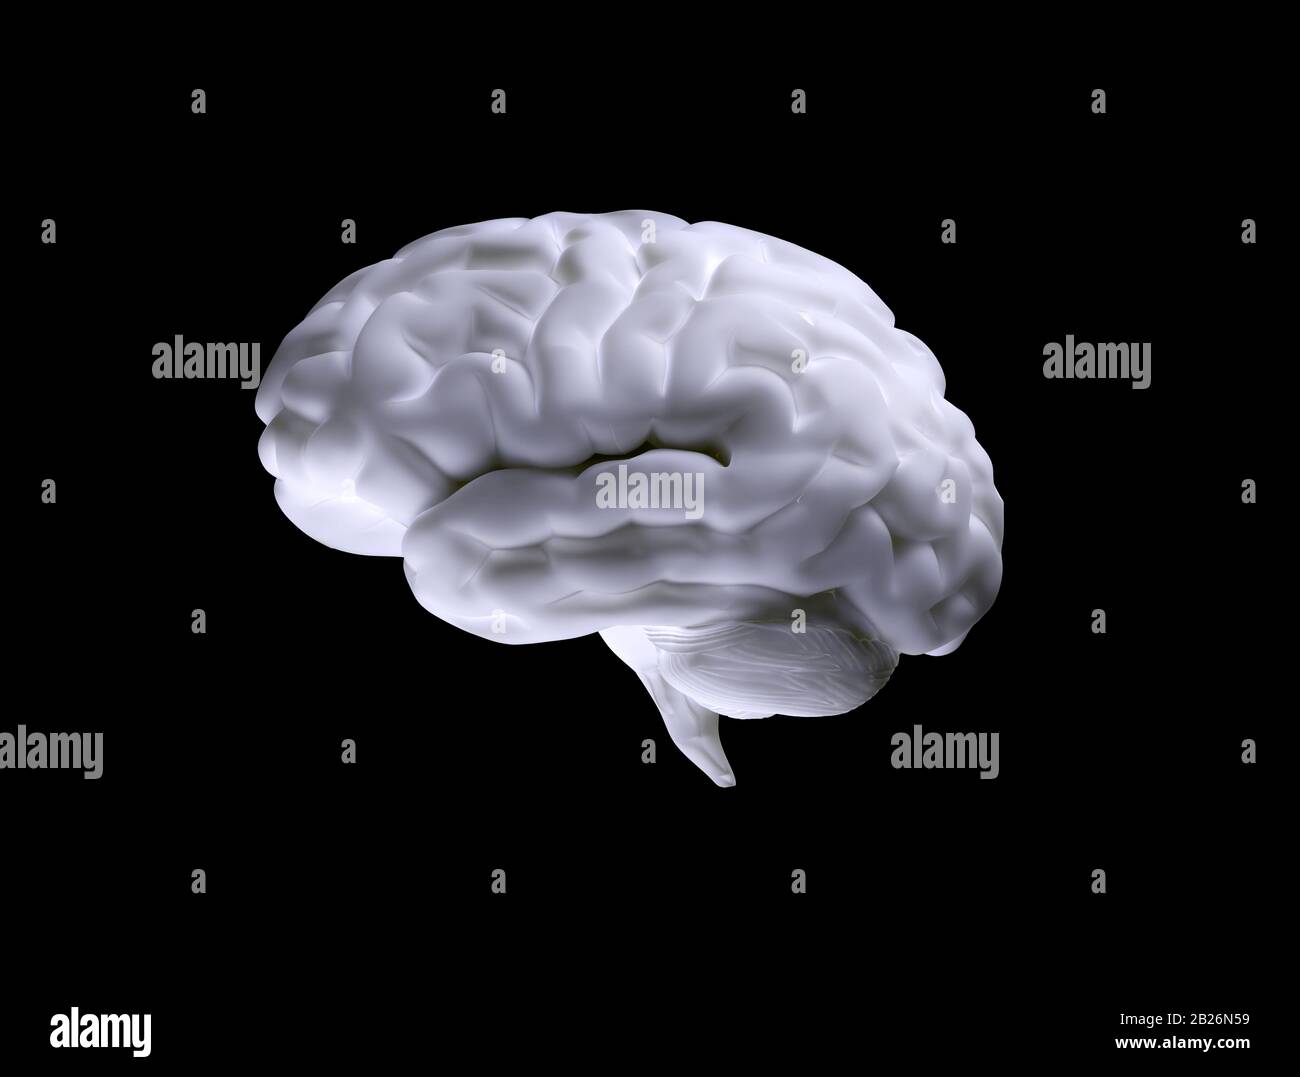 Modelo del cerebro humano aislado sobre fondo negro Foto de stock